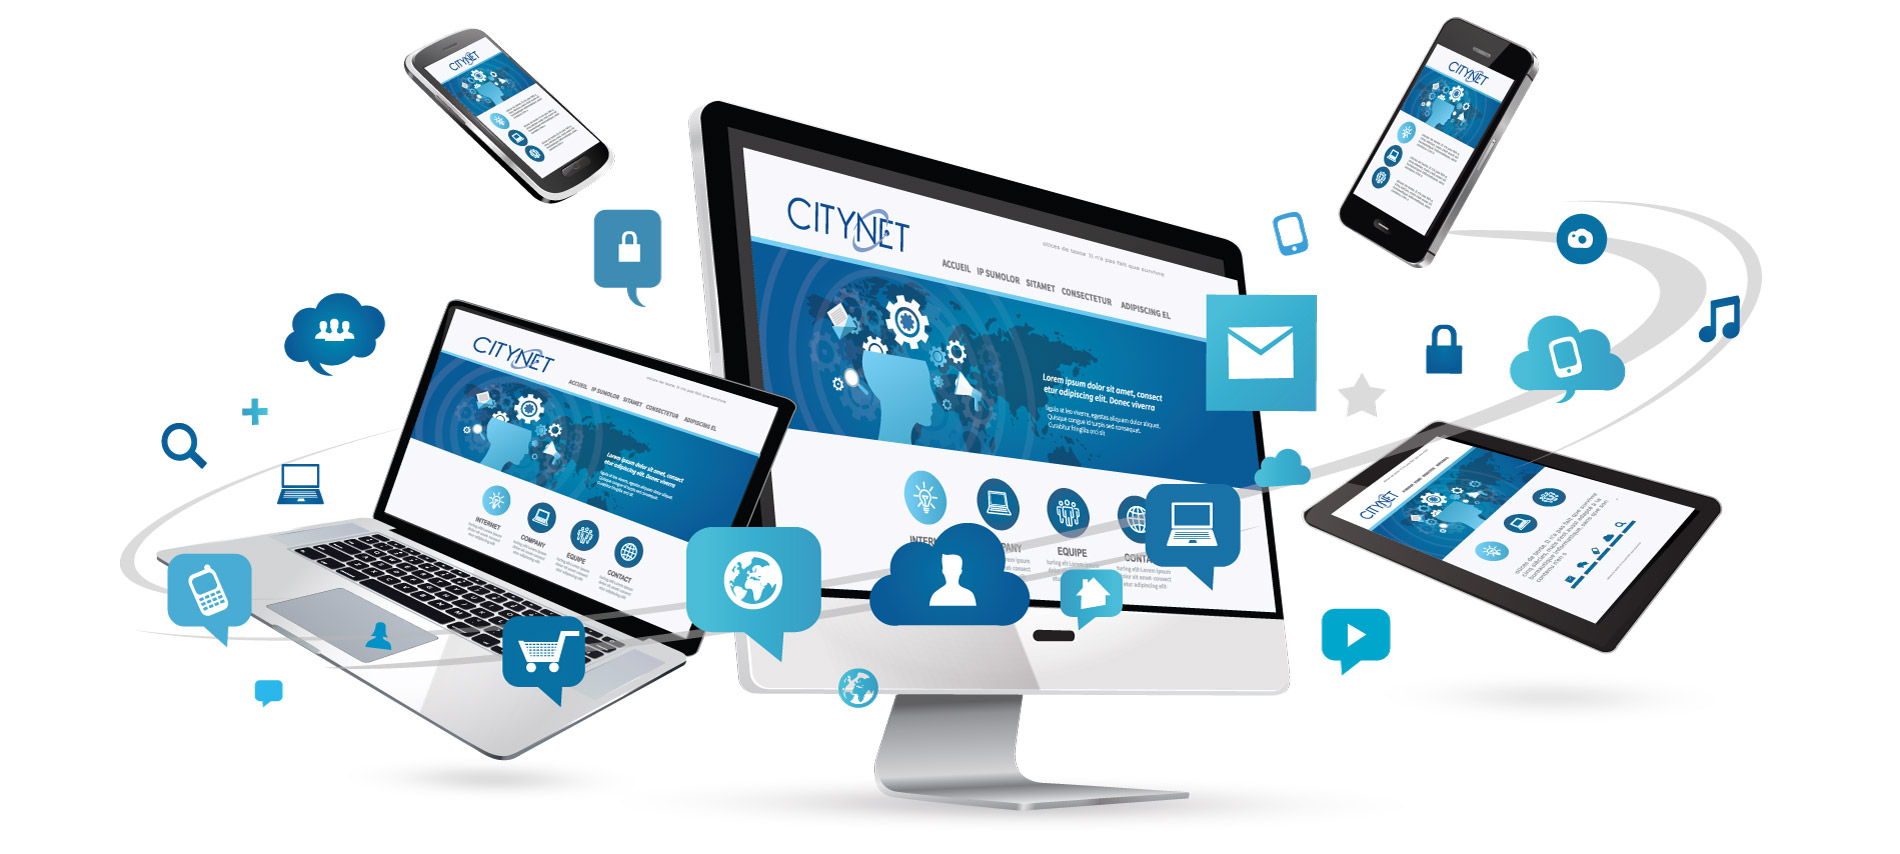 Citynet Fiber Multiple Devices